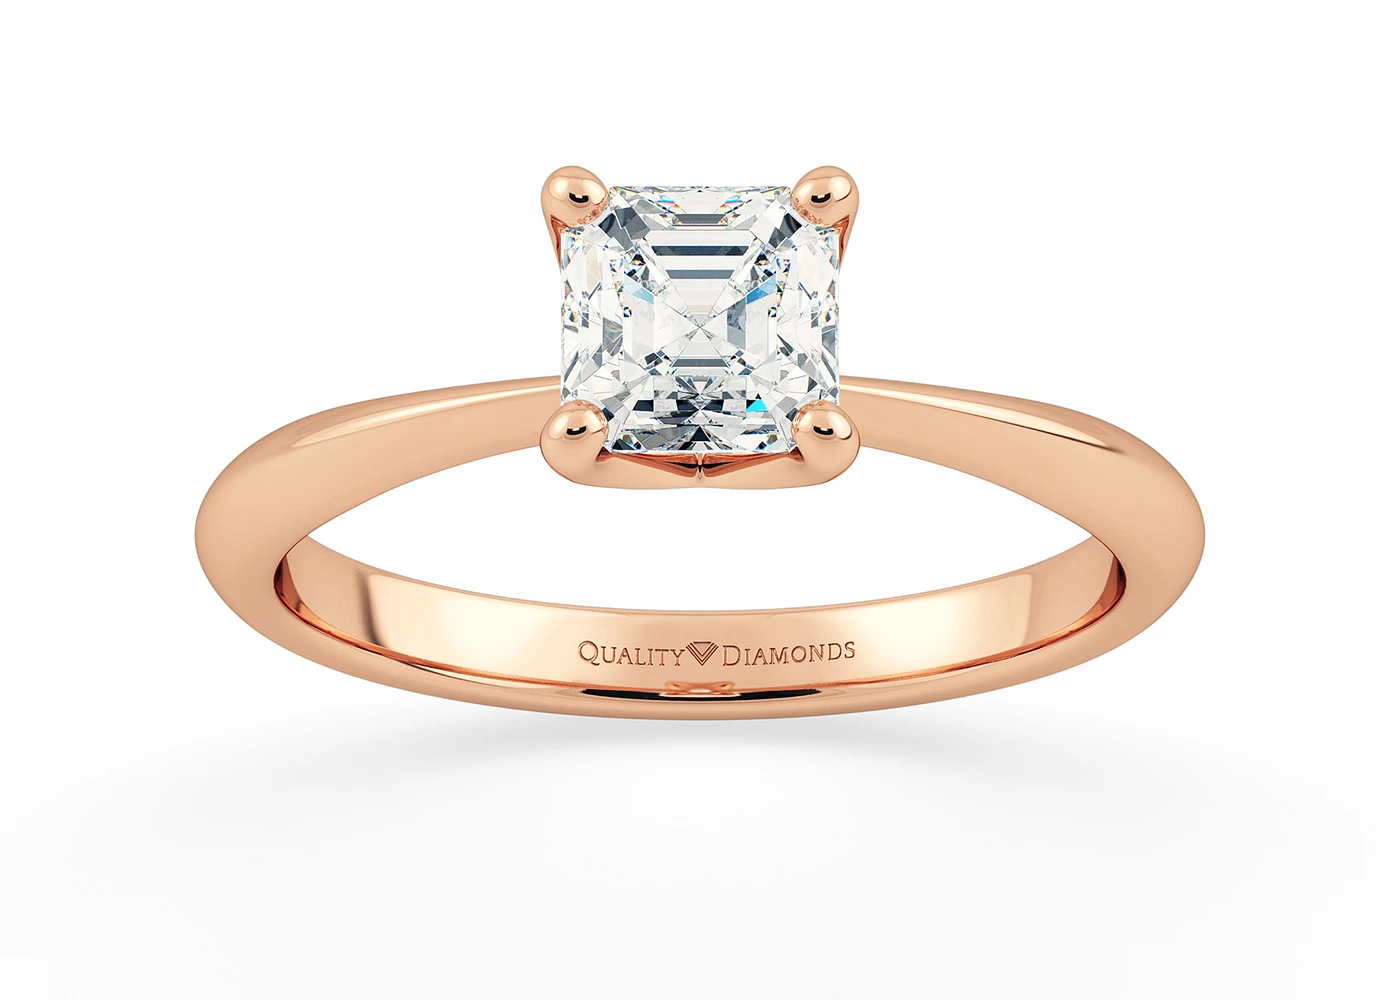 Amorette Asscher Diamond Ring in 9K Rose Gold